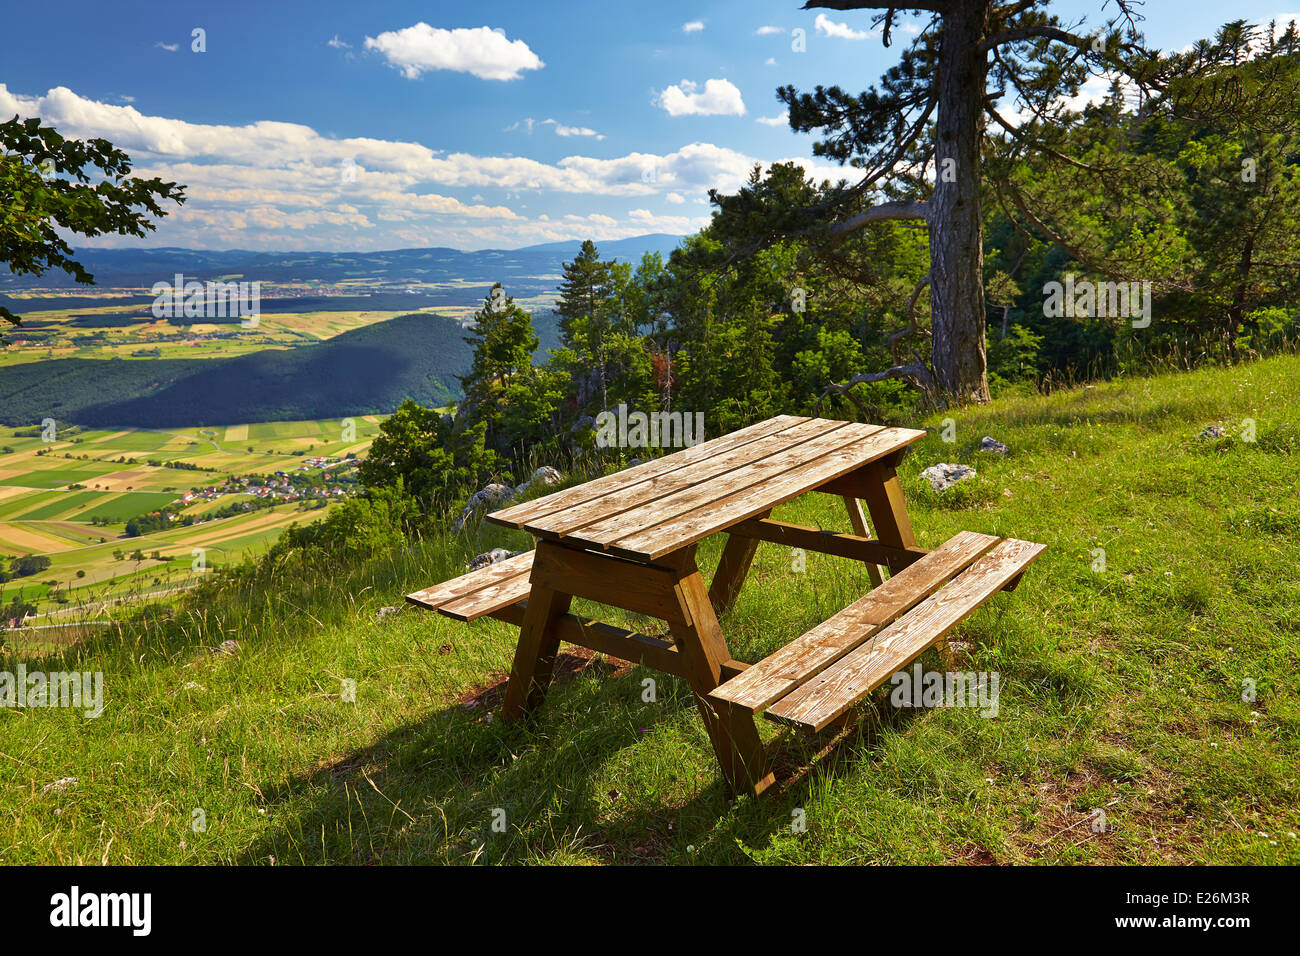 Outdoor bench Stock Photo